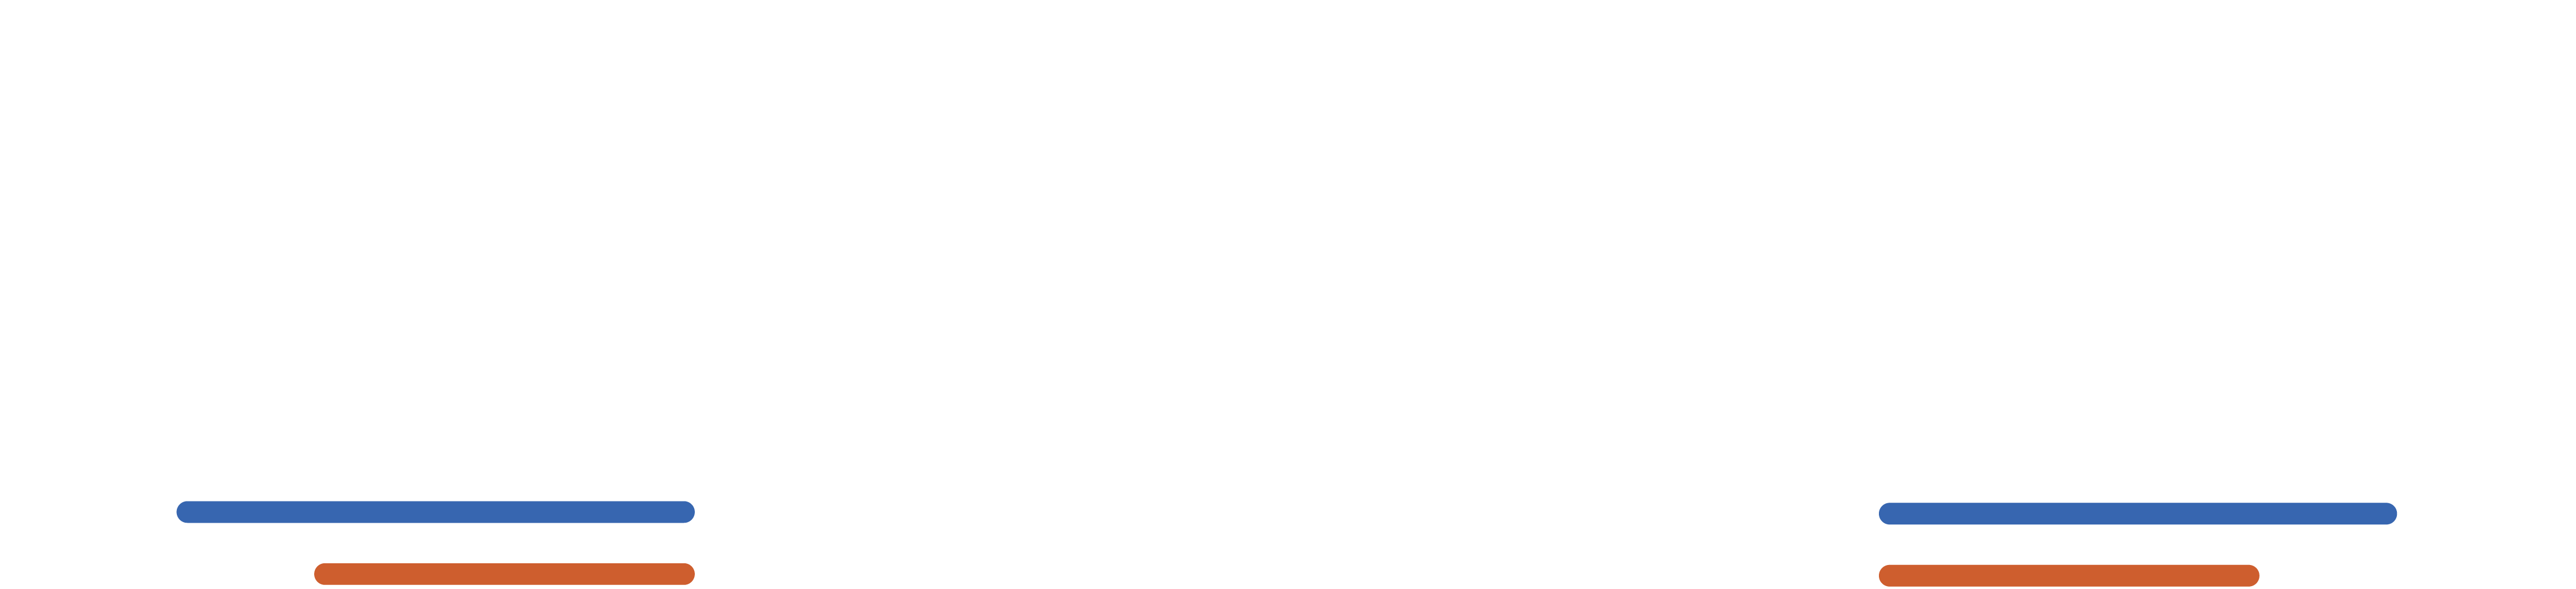 Boarding Pass Coffee